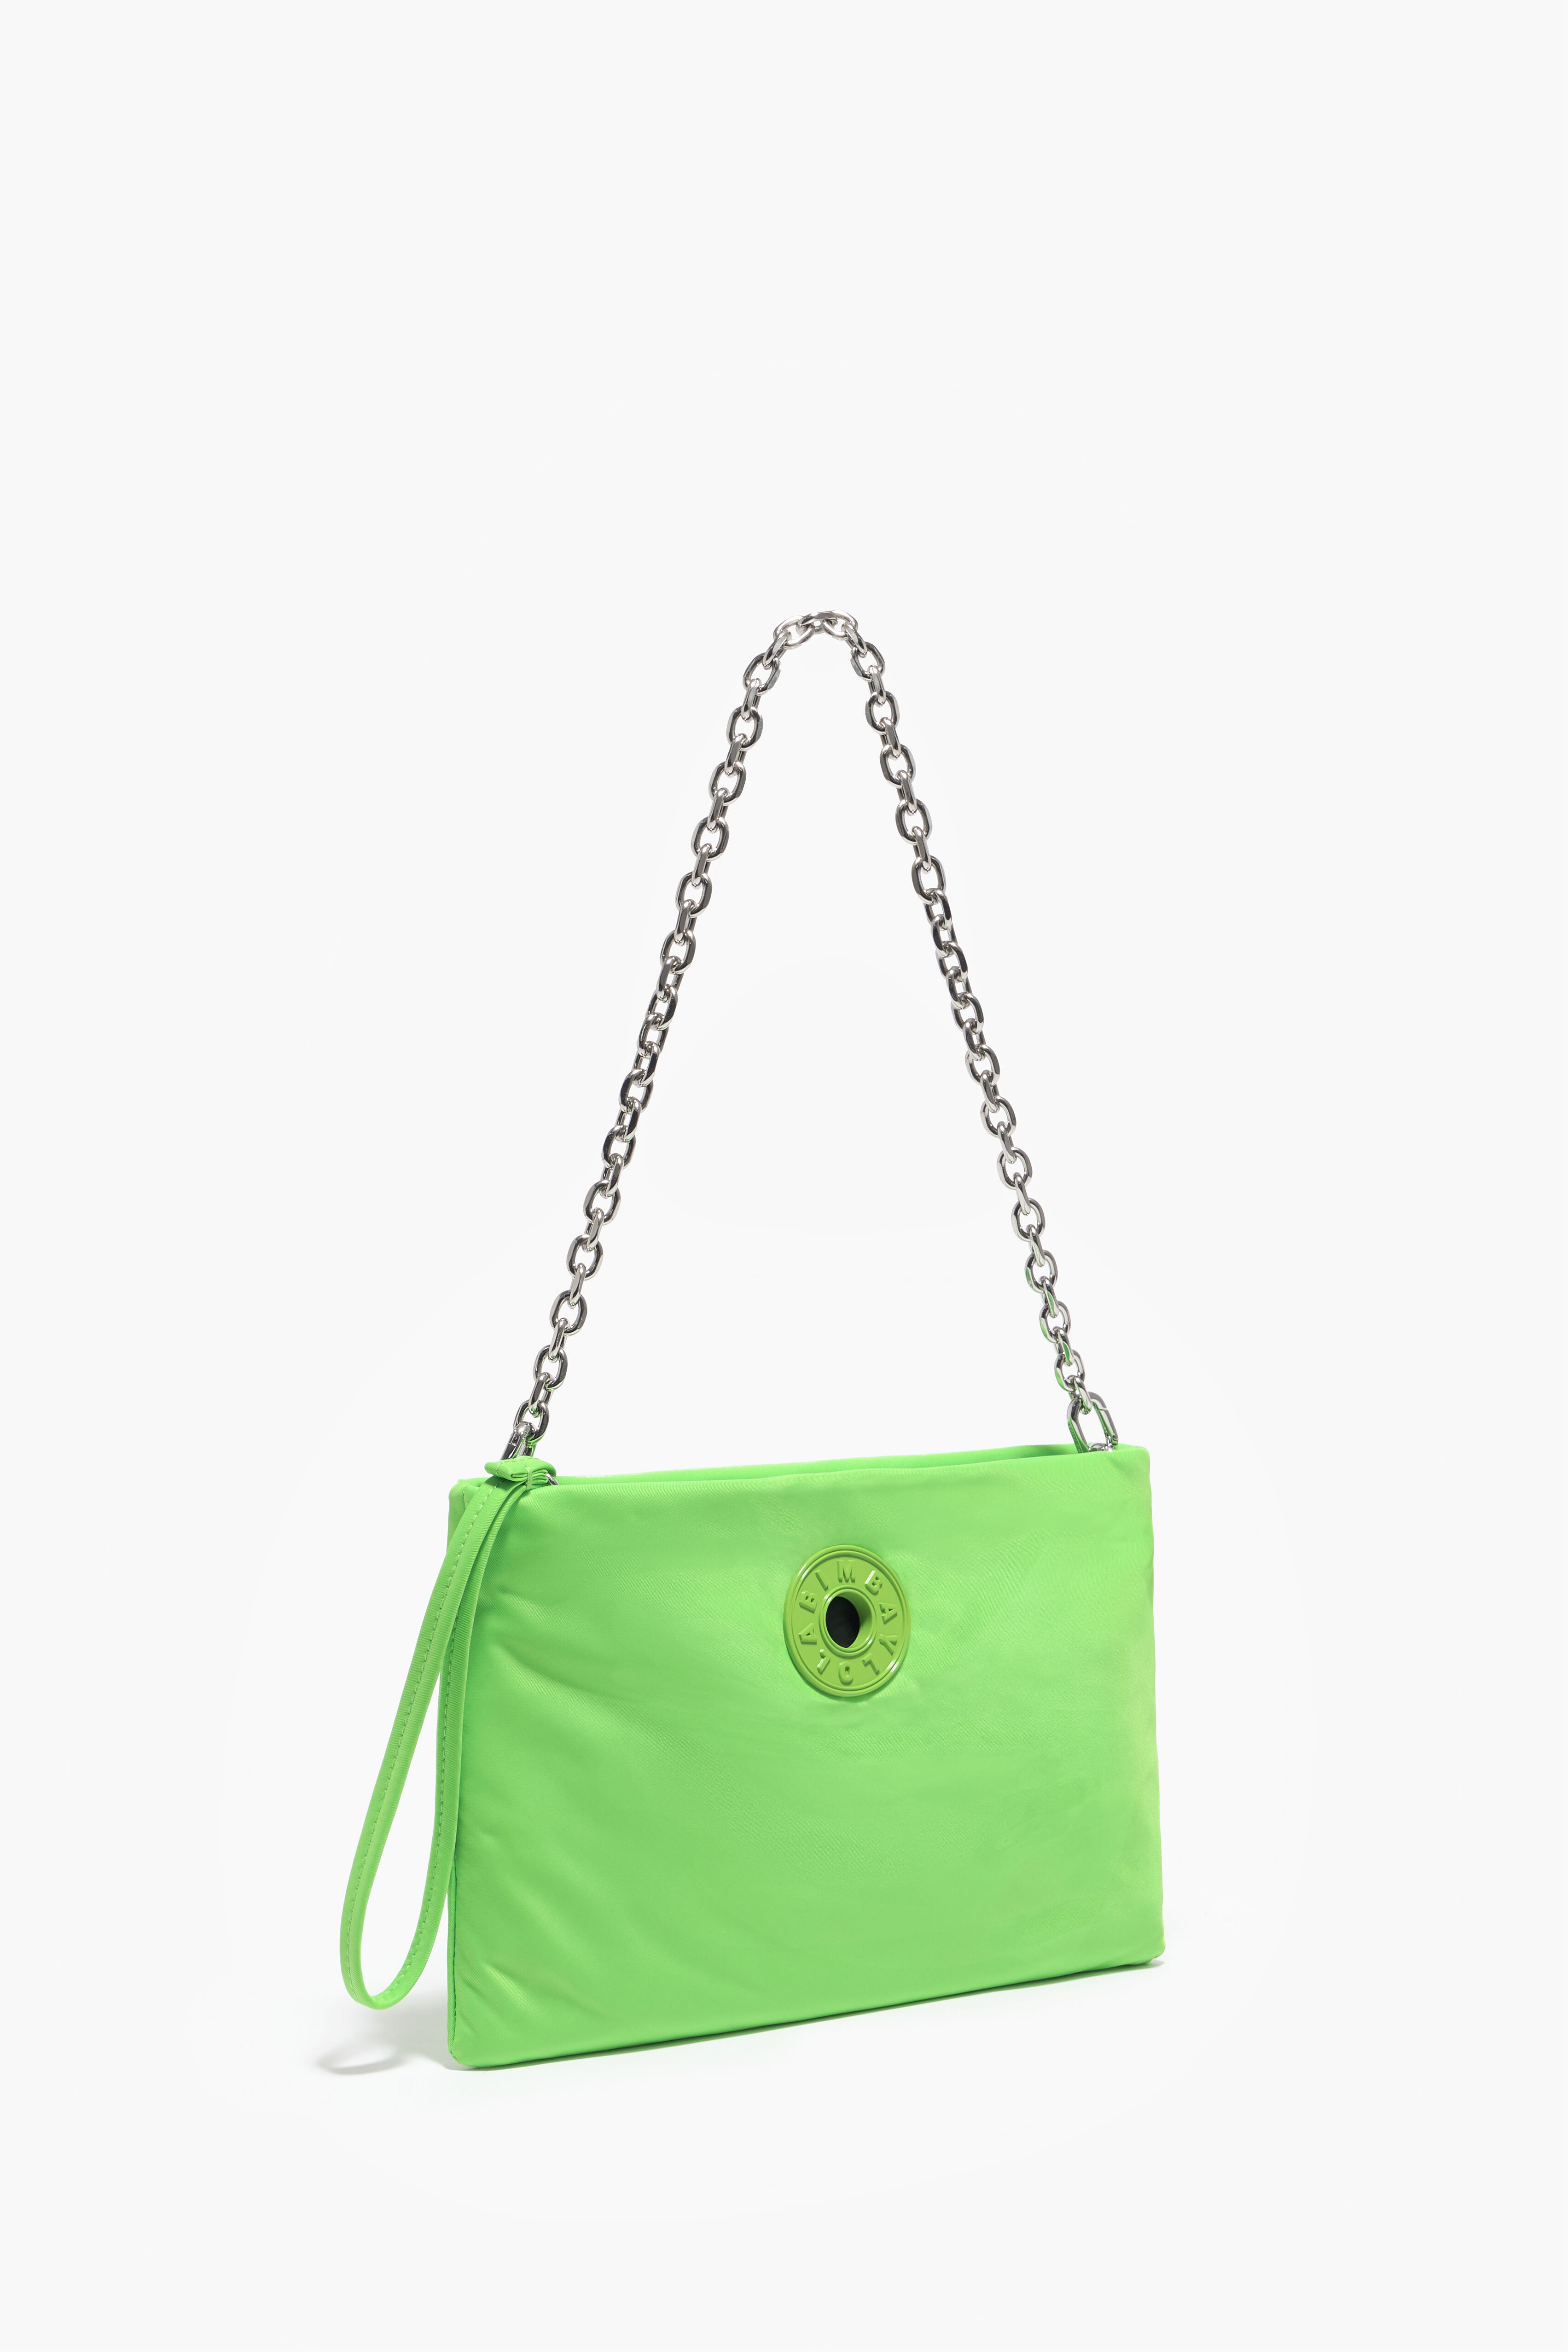 Source Neon green clear pvc womens bag handbag transparent clear bag tote  on malibabacom